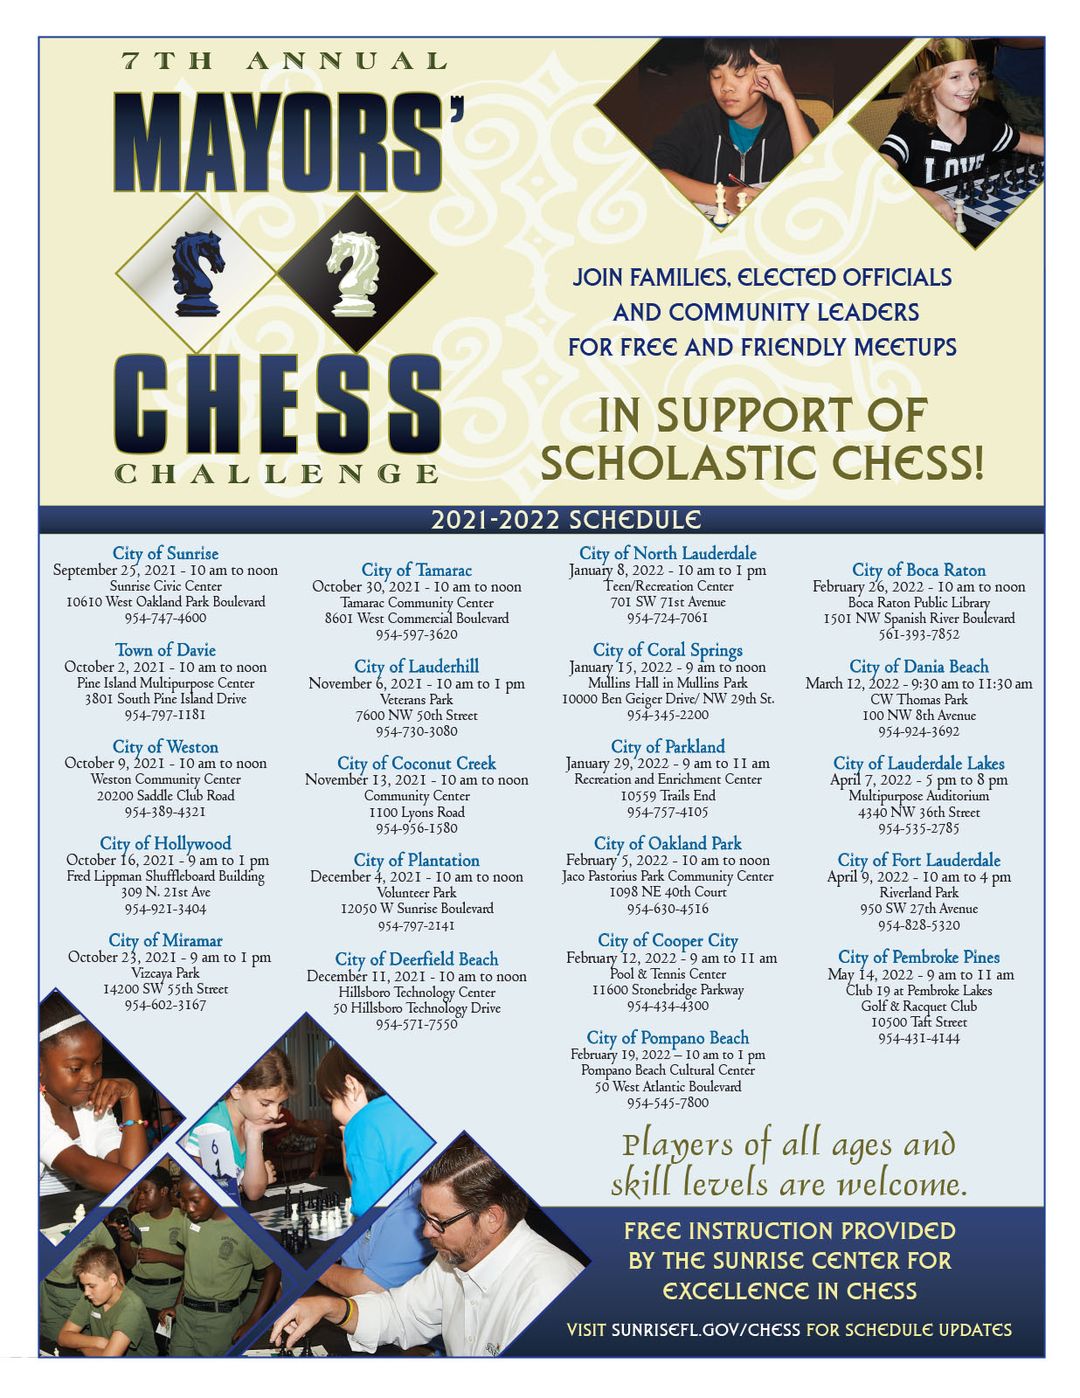 Tamarac Hosts Mayors' Chess Challenge October 30